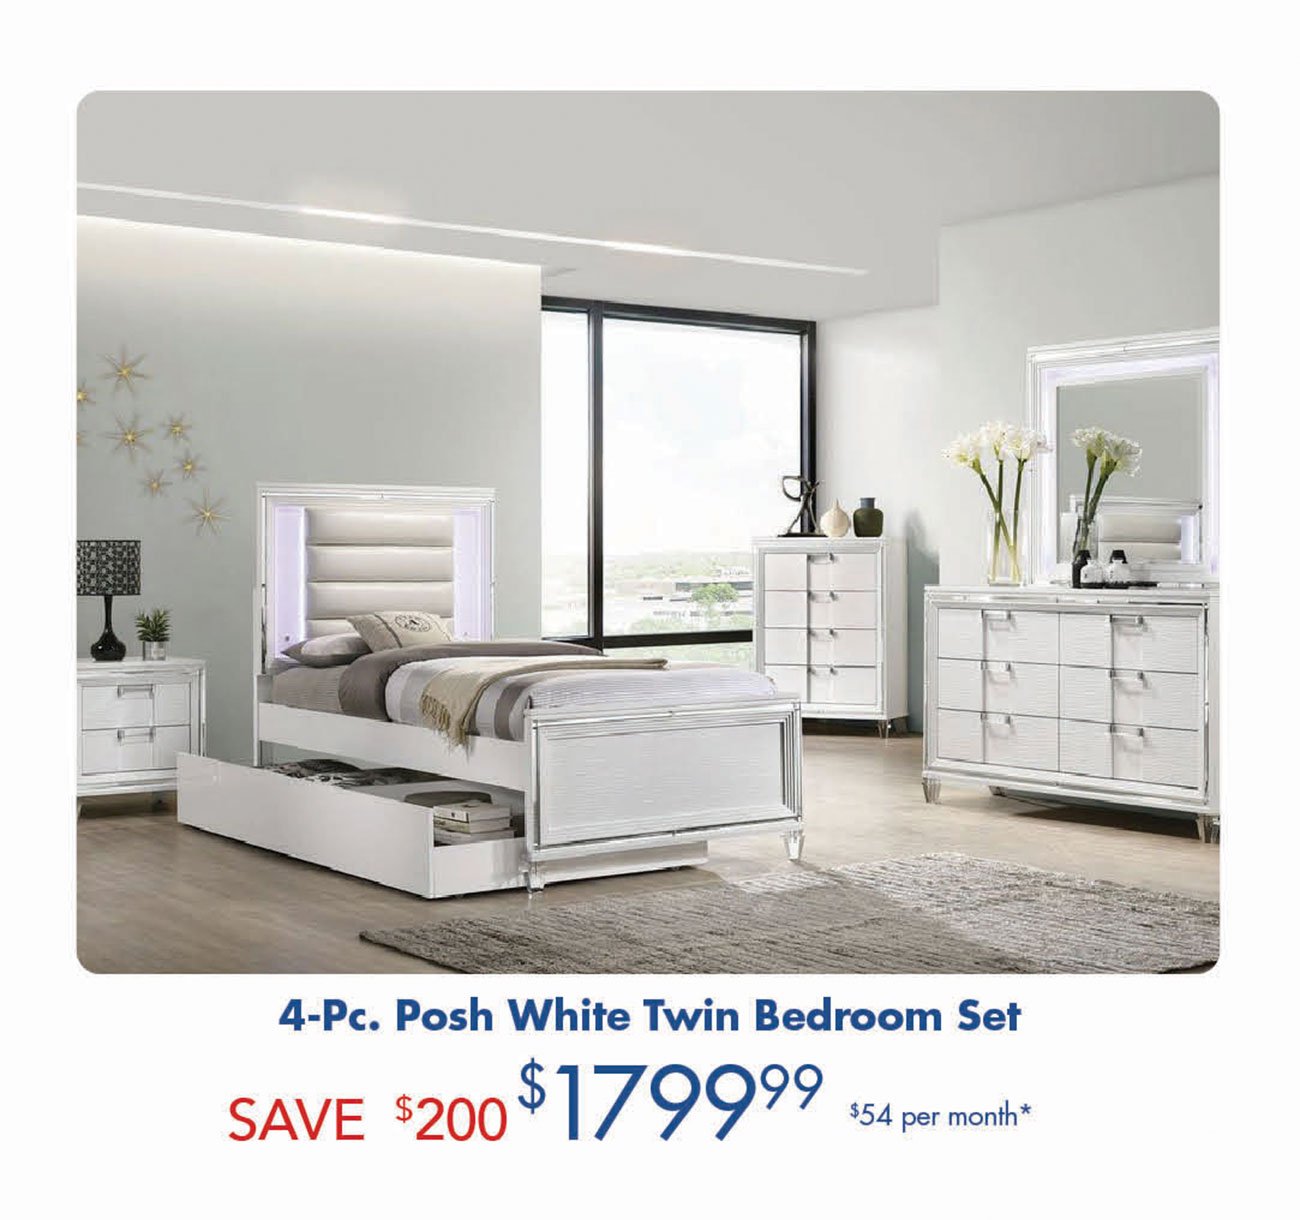 Posh-White-Twin-Bedroom-Set